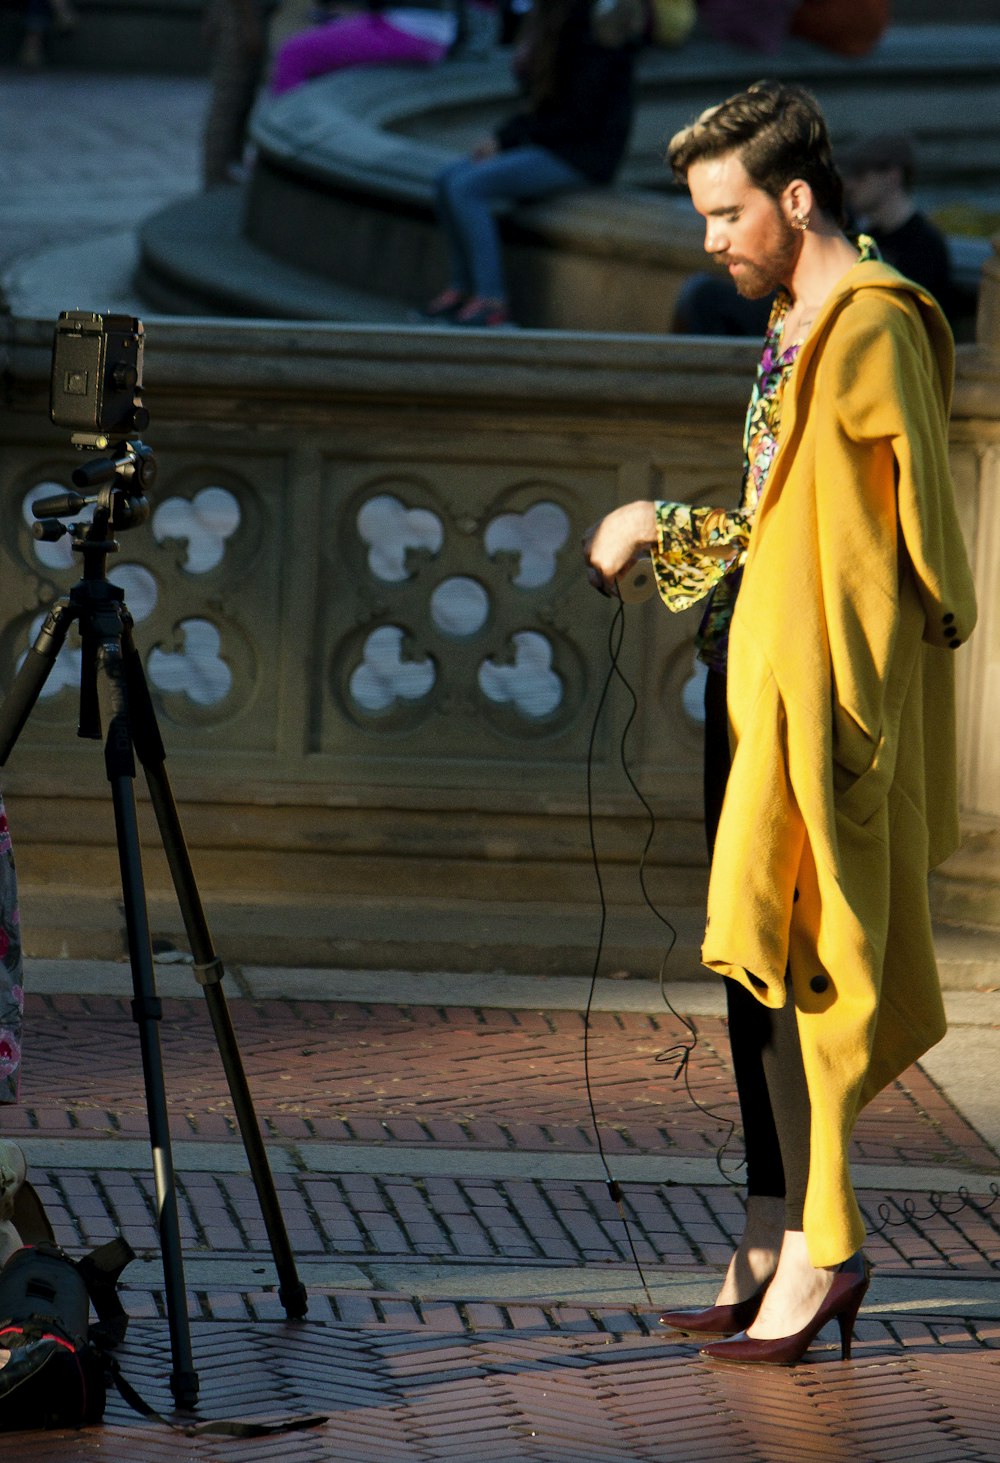 woman in yellow robe standing beside black camera tripod